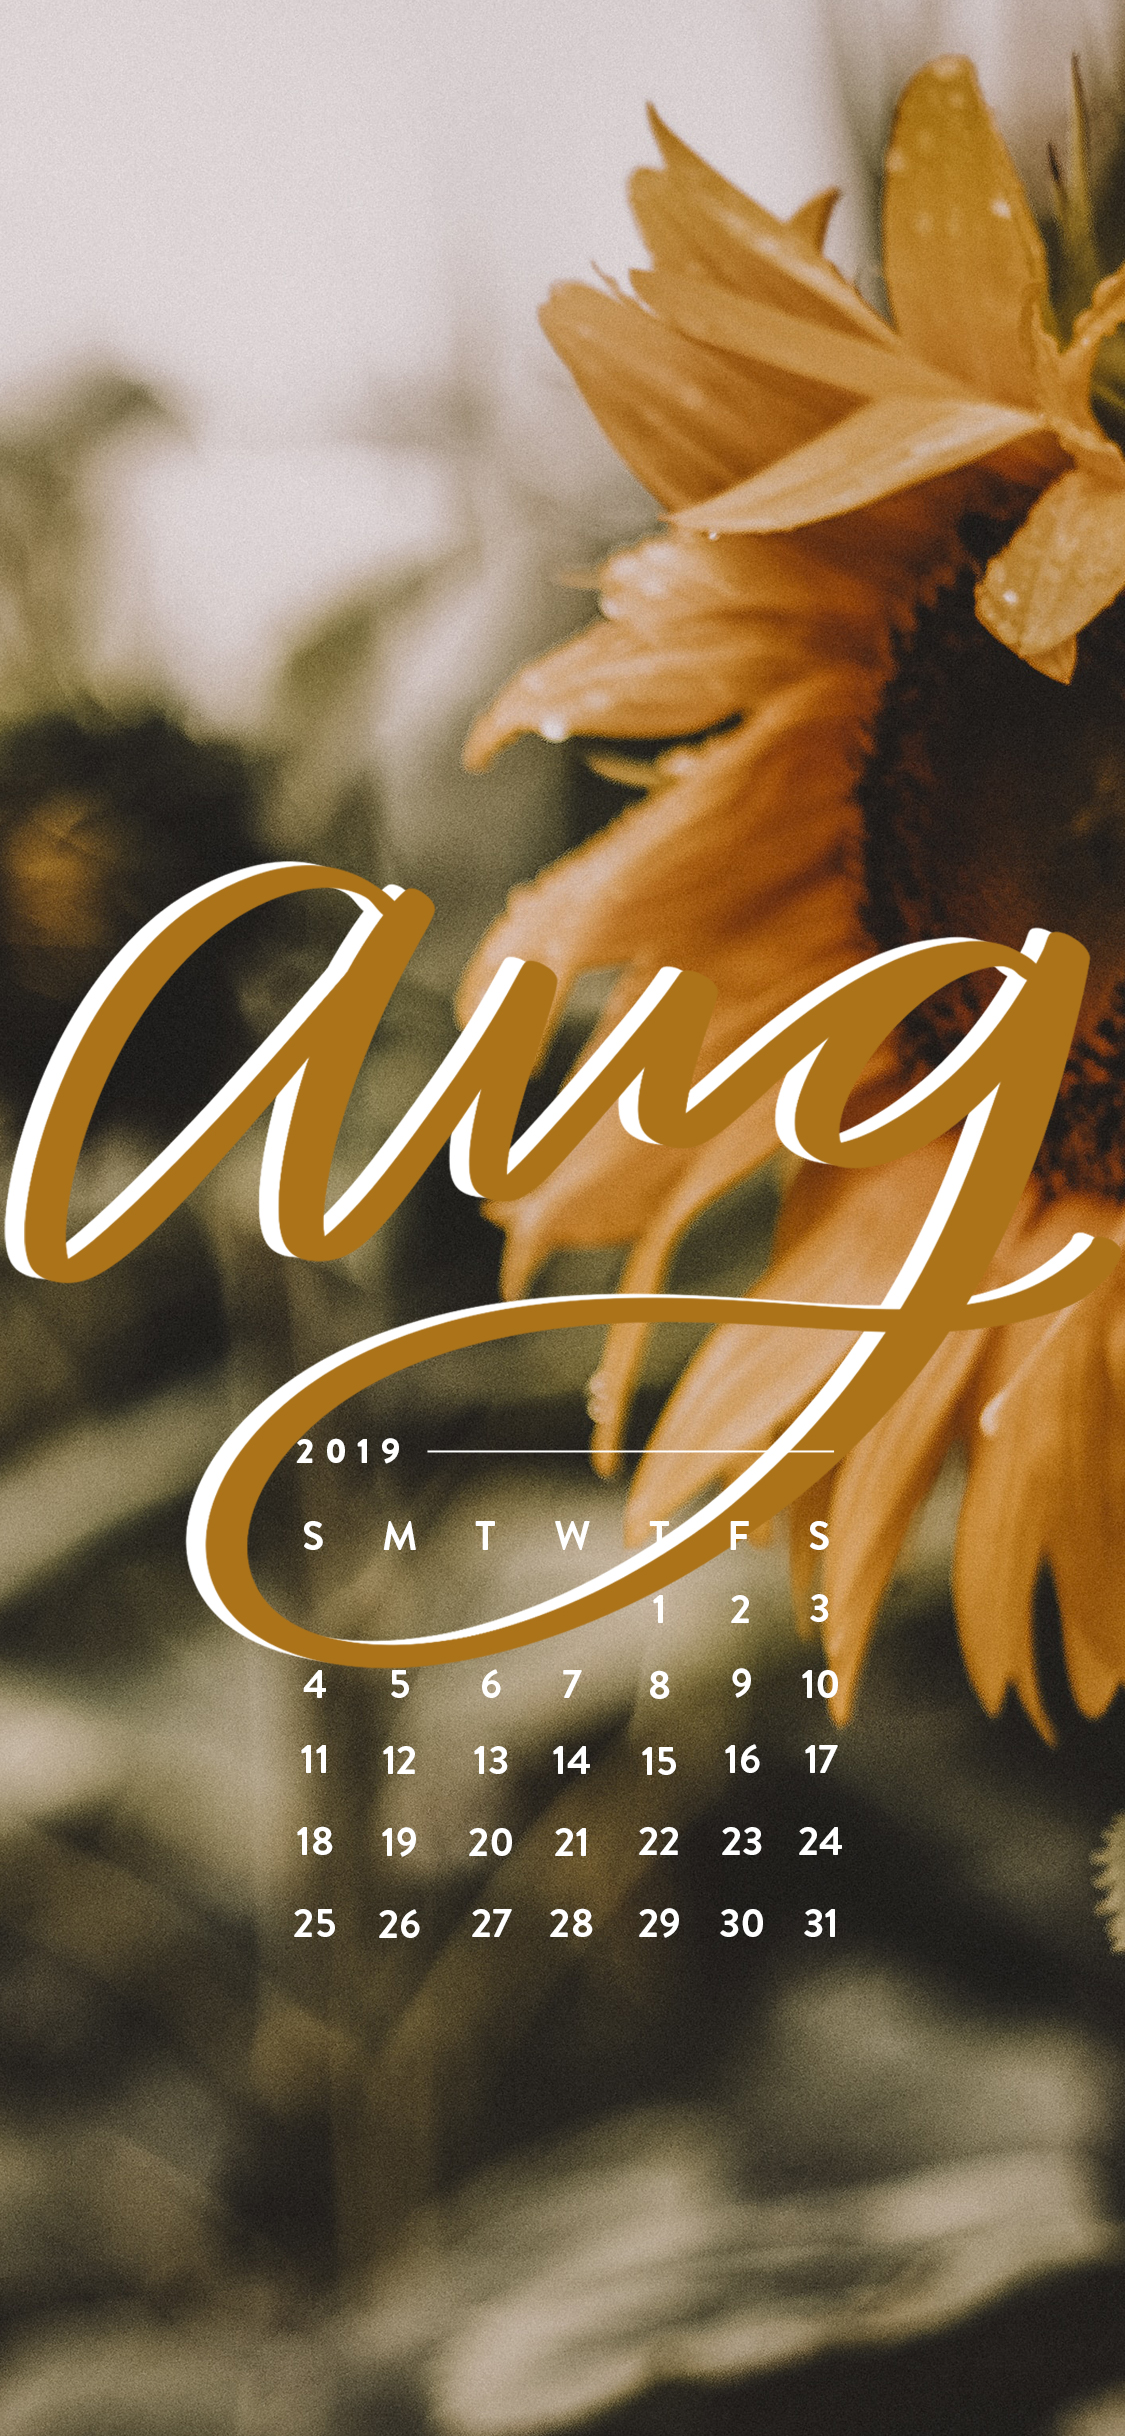 August Background